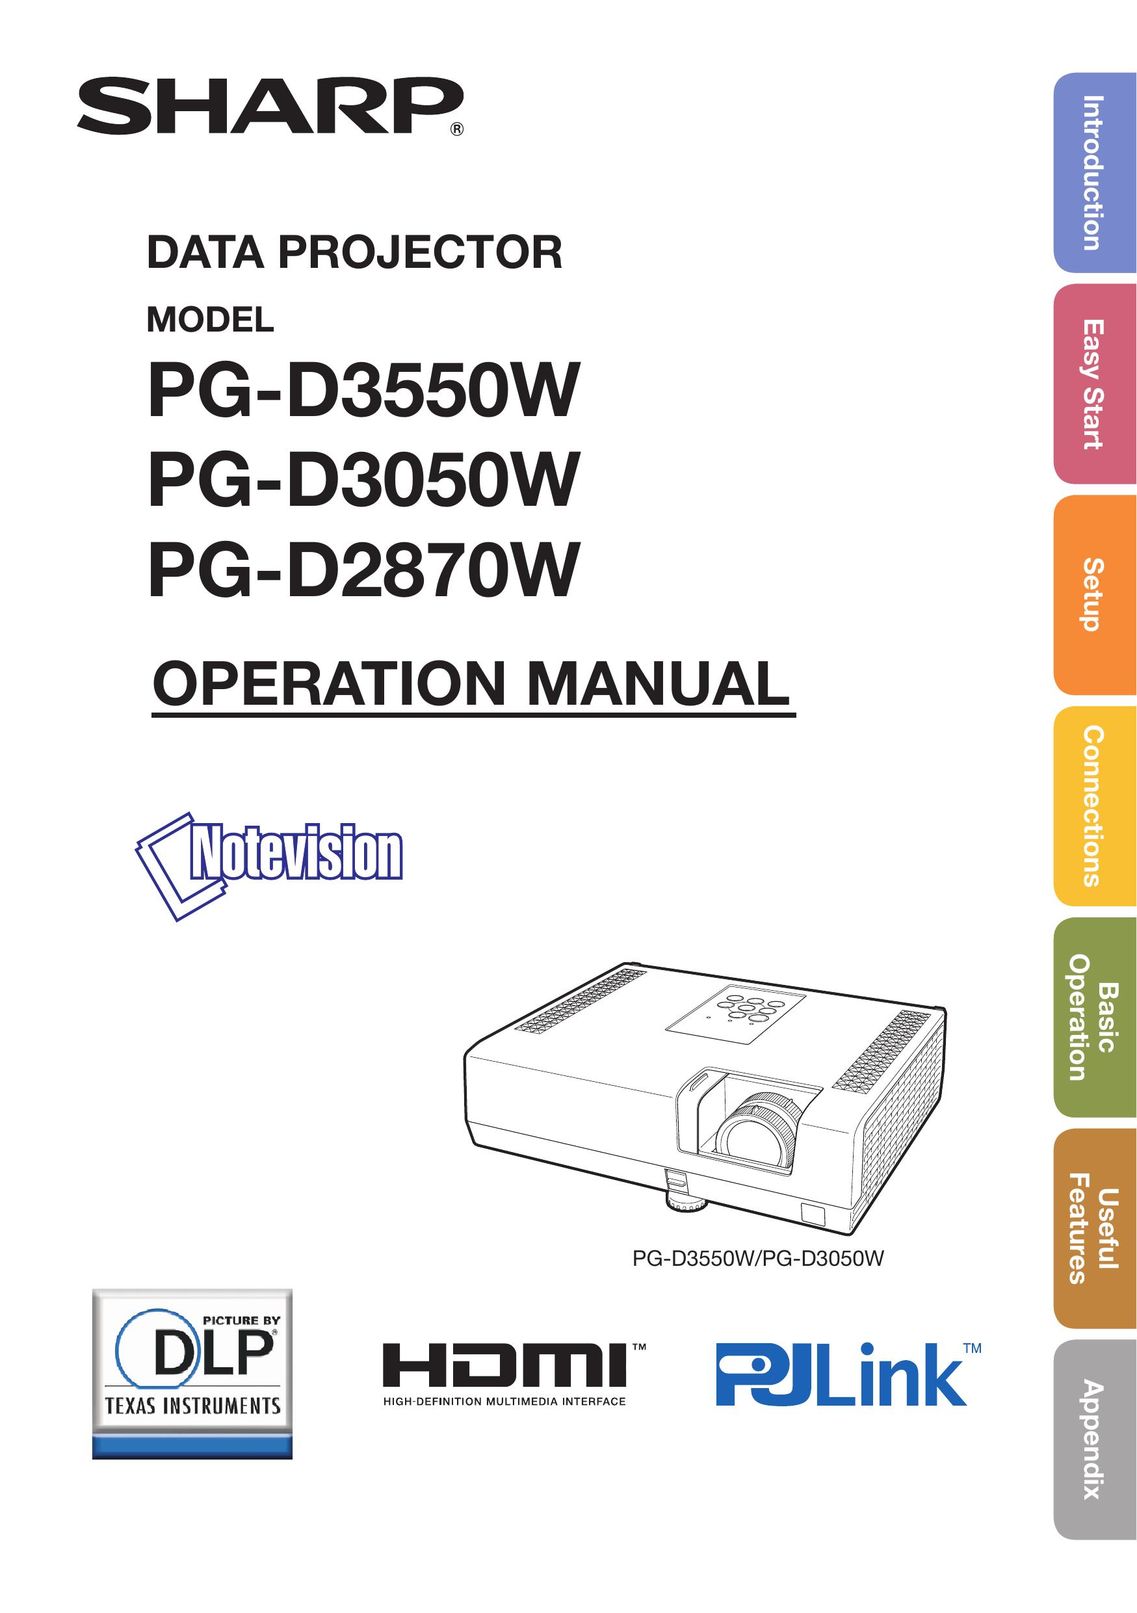 Sharp PG-D2870W Projector User Manual